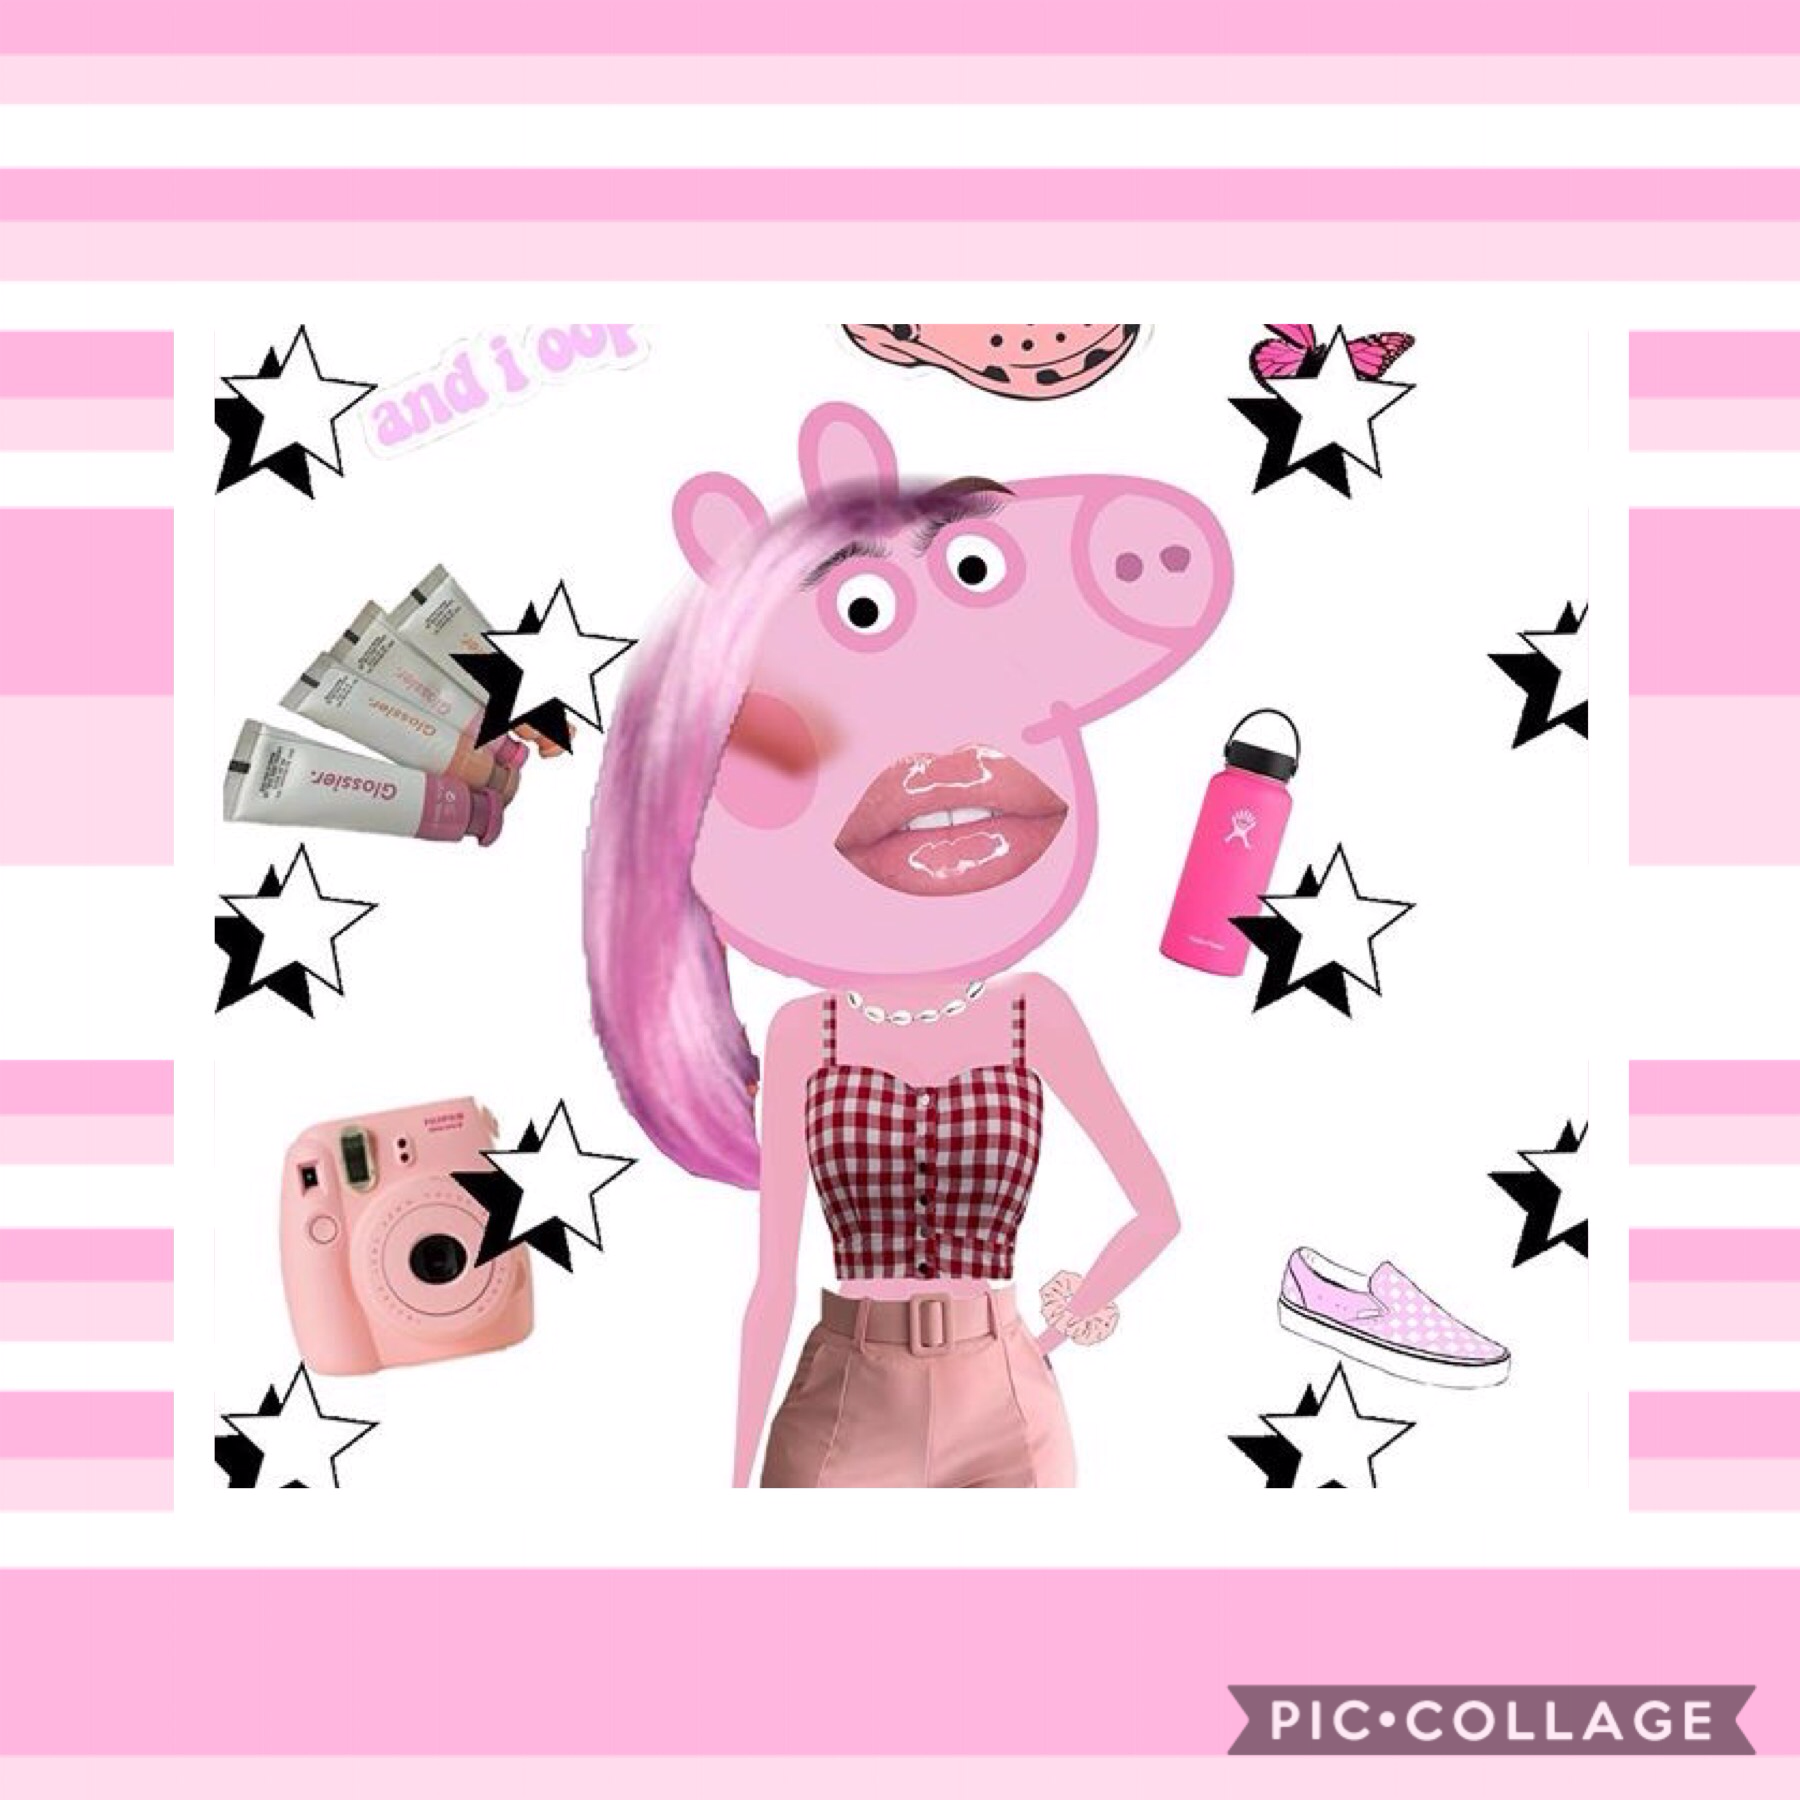 PEPPA PIG...

True identity exposed 